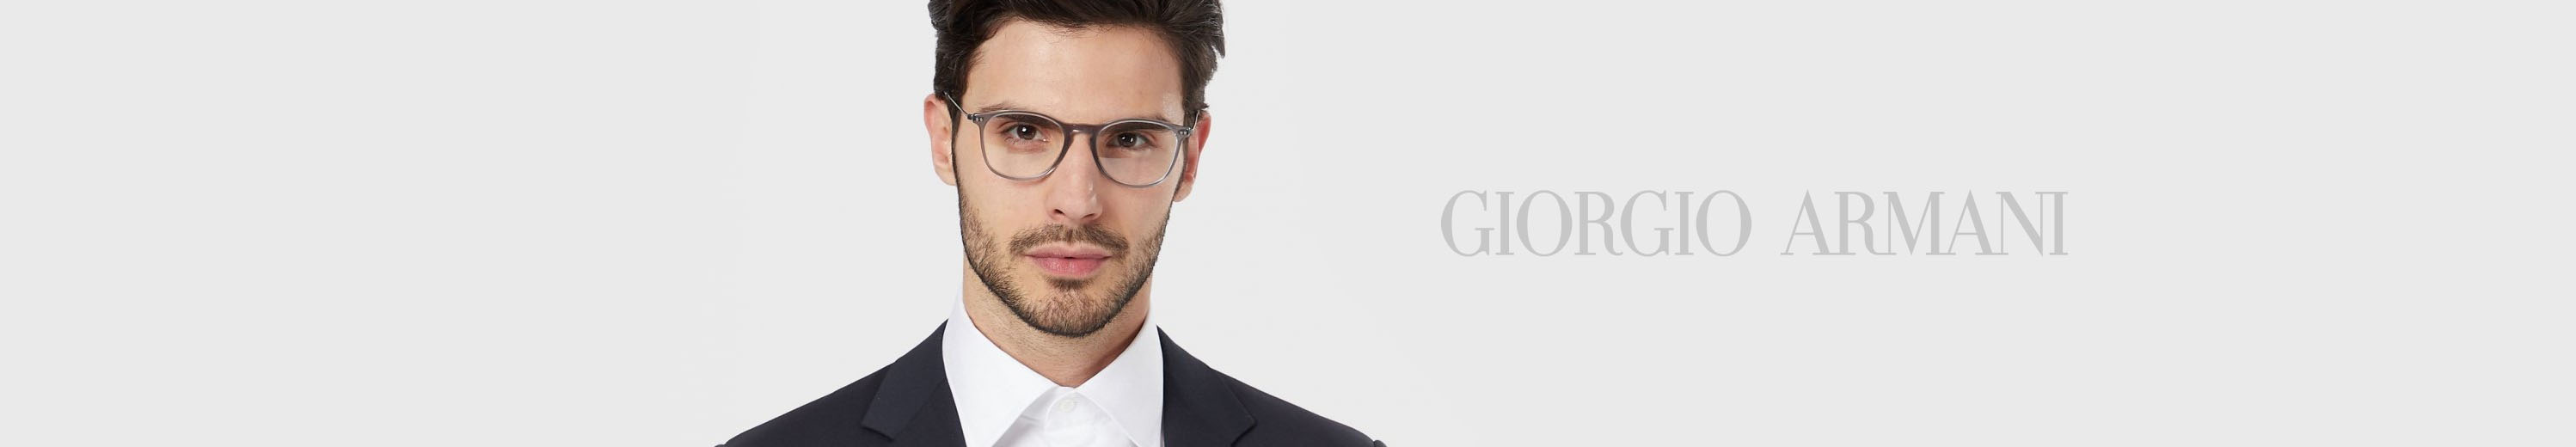 Giorgio Armani Wayfarer Eyeglasses